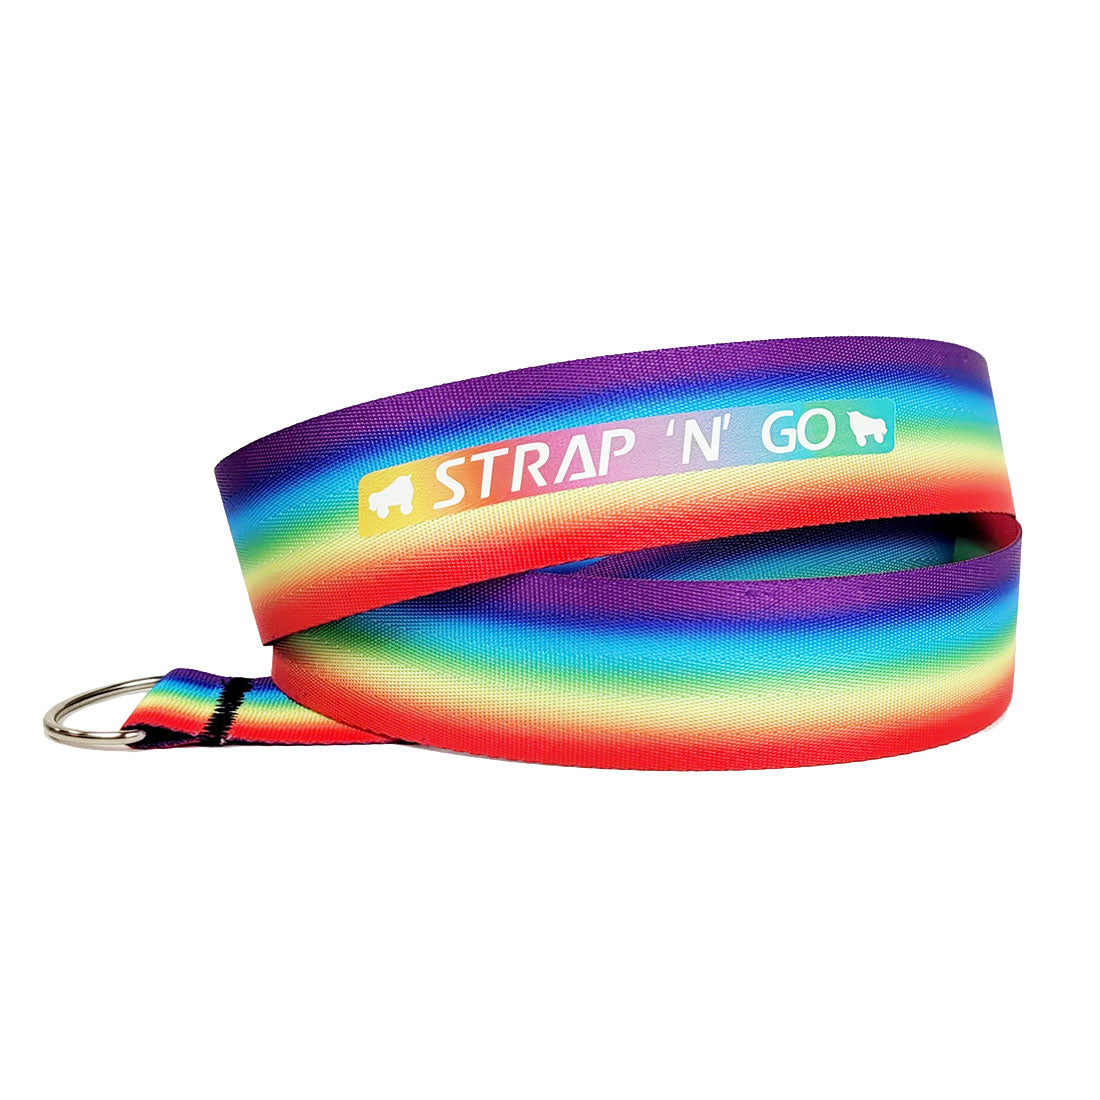 Strap N Go Skate Noose/Leash - Patterns Rainbow Fade Roller Skate Accessories